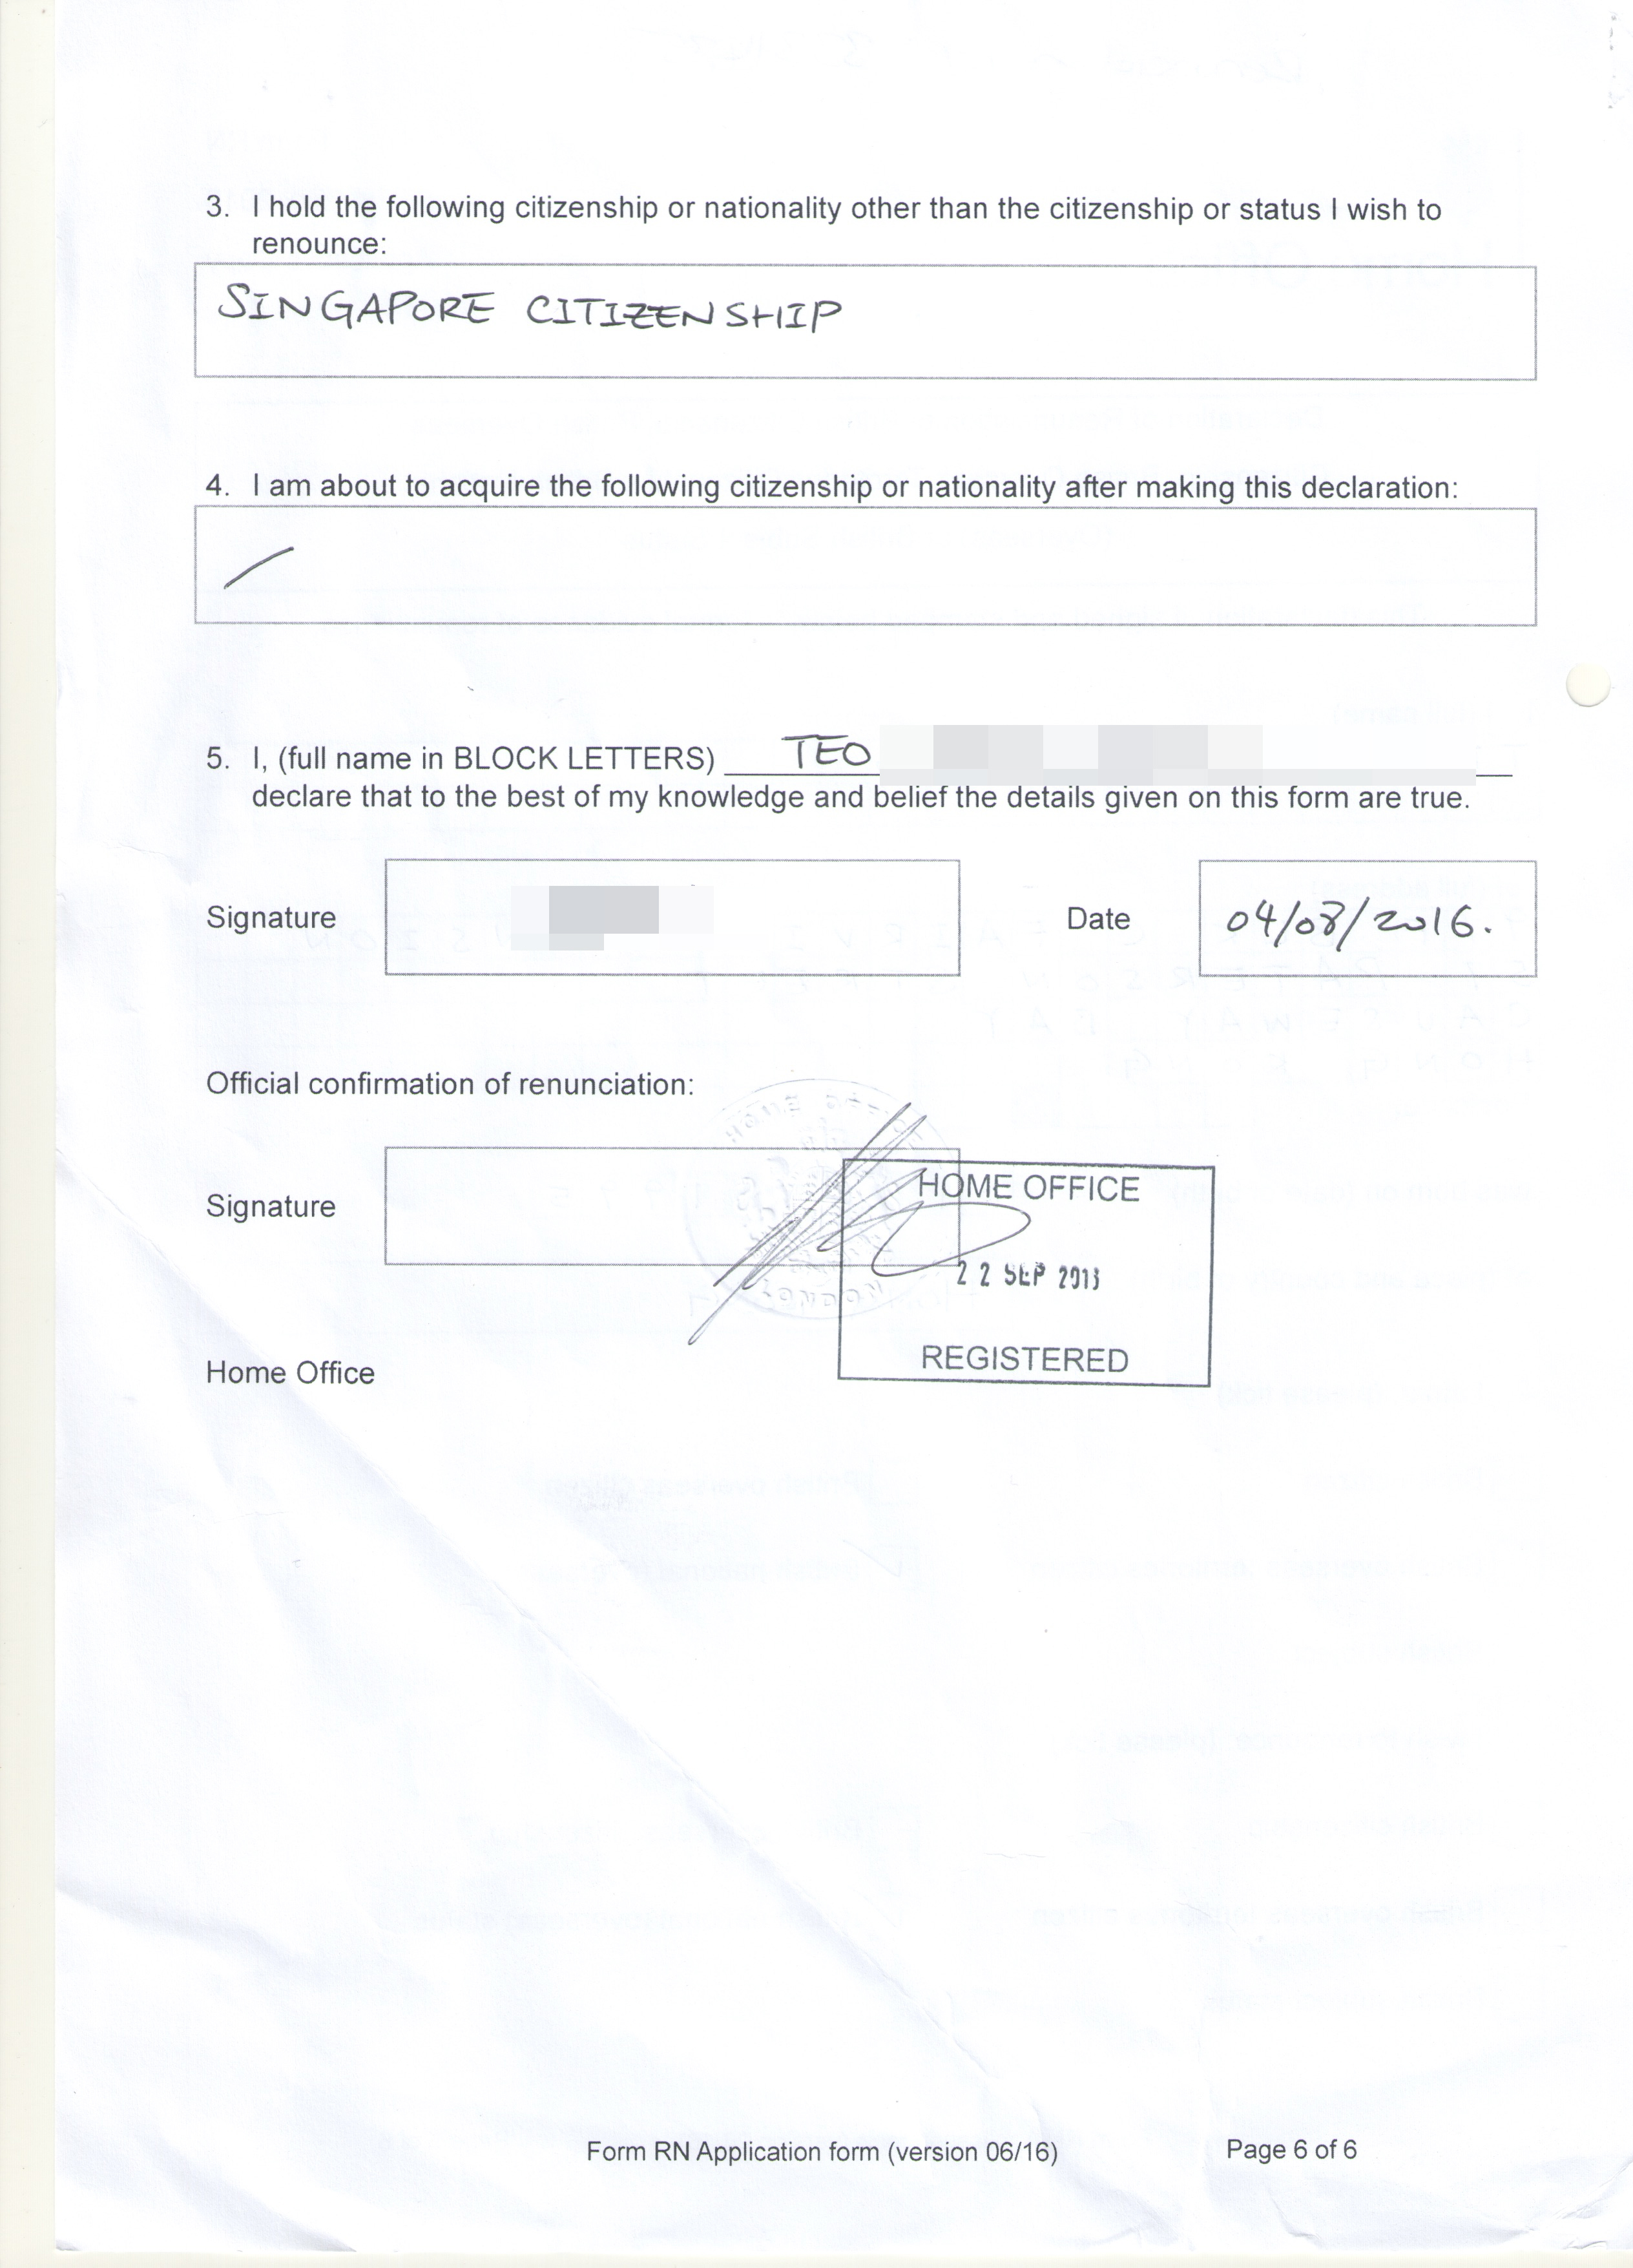 Andrew Leung’s British citizenship renunciation document